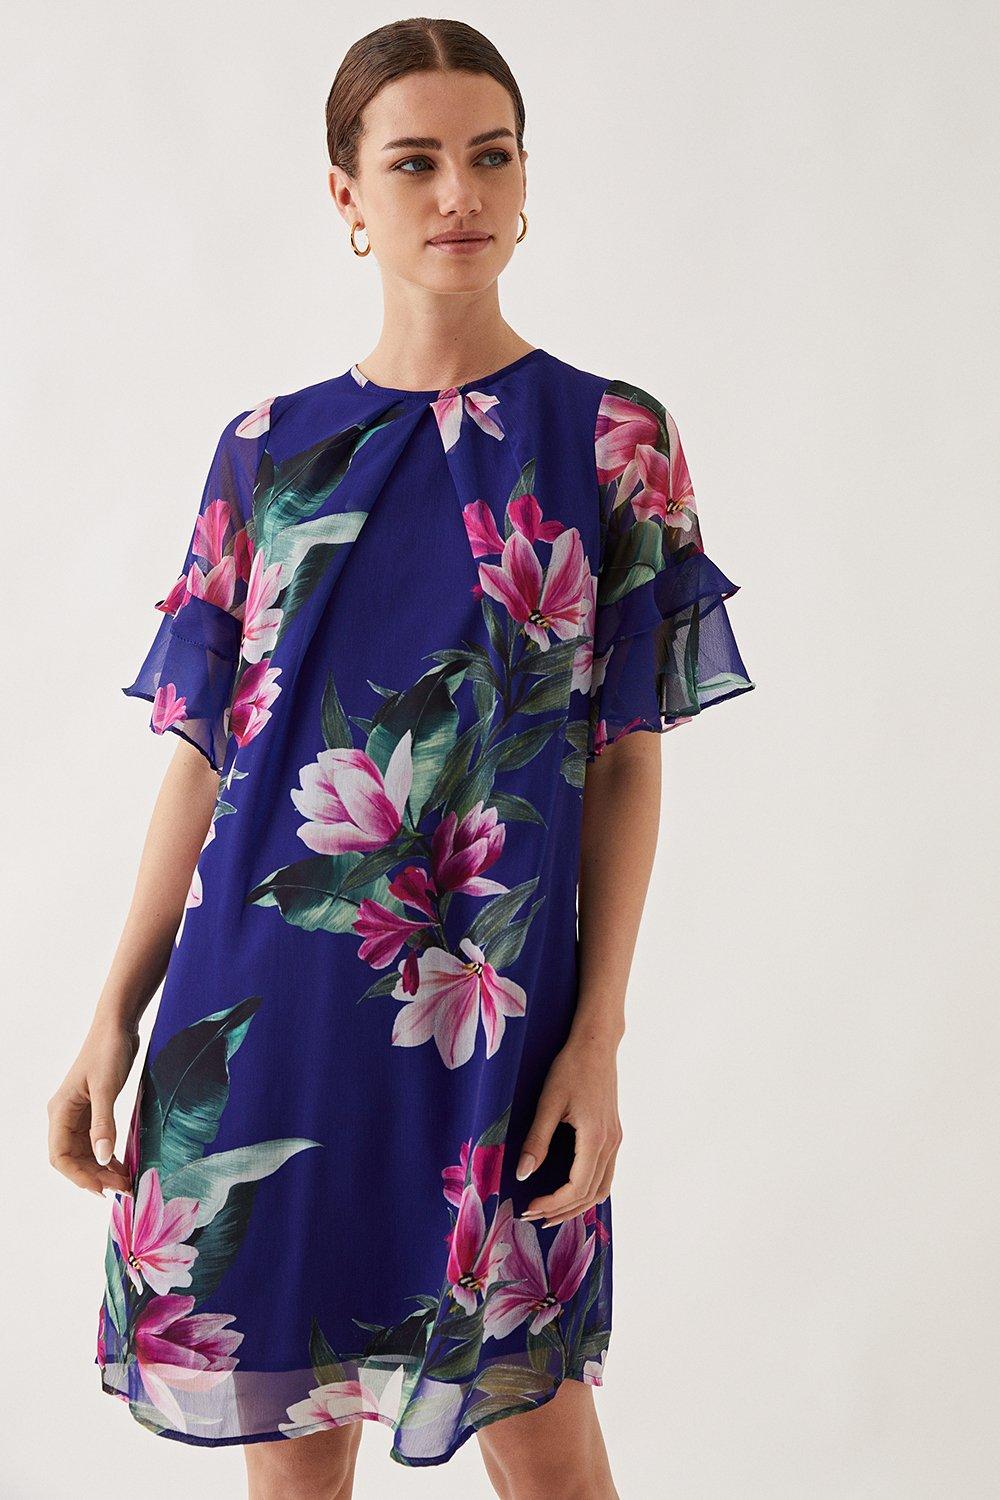 Womens Petite Navy Floral Print Ruffle Sleeve Shift Dress